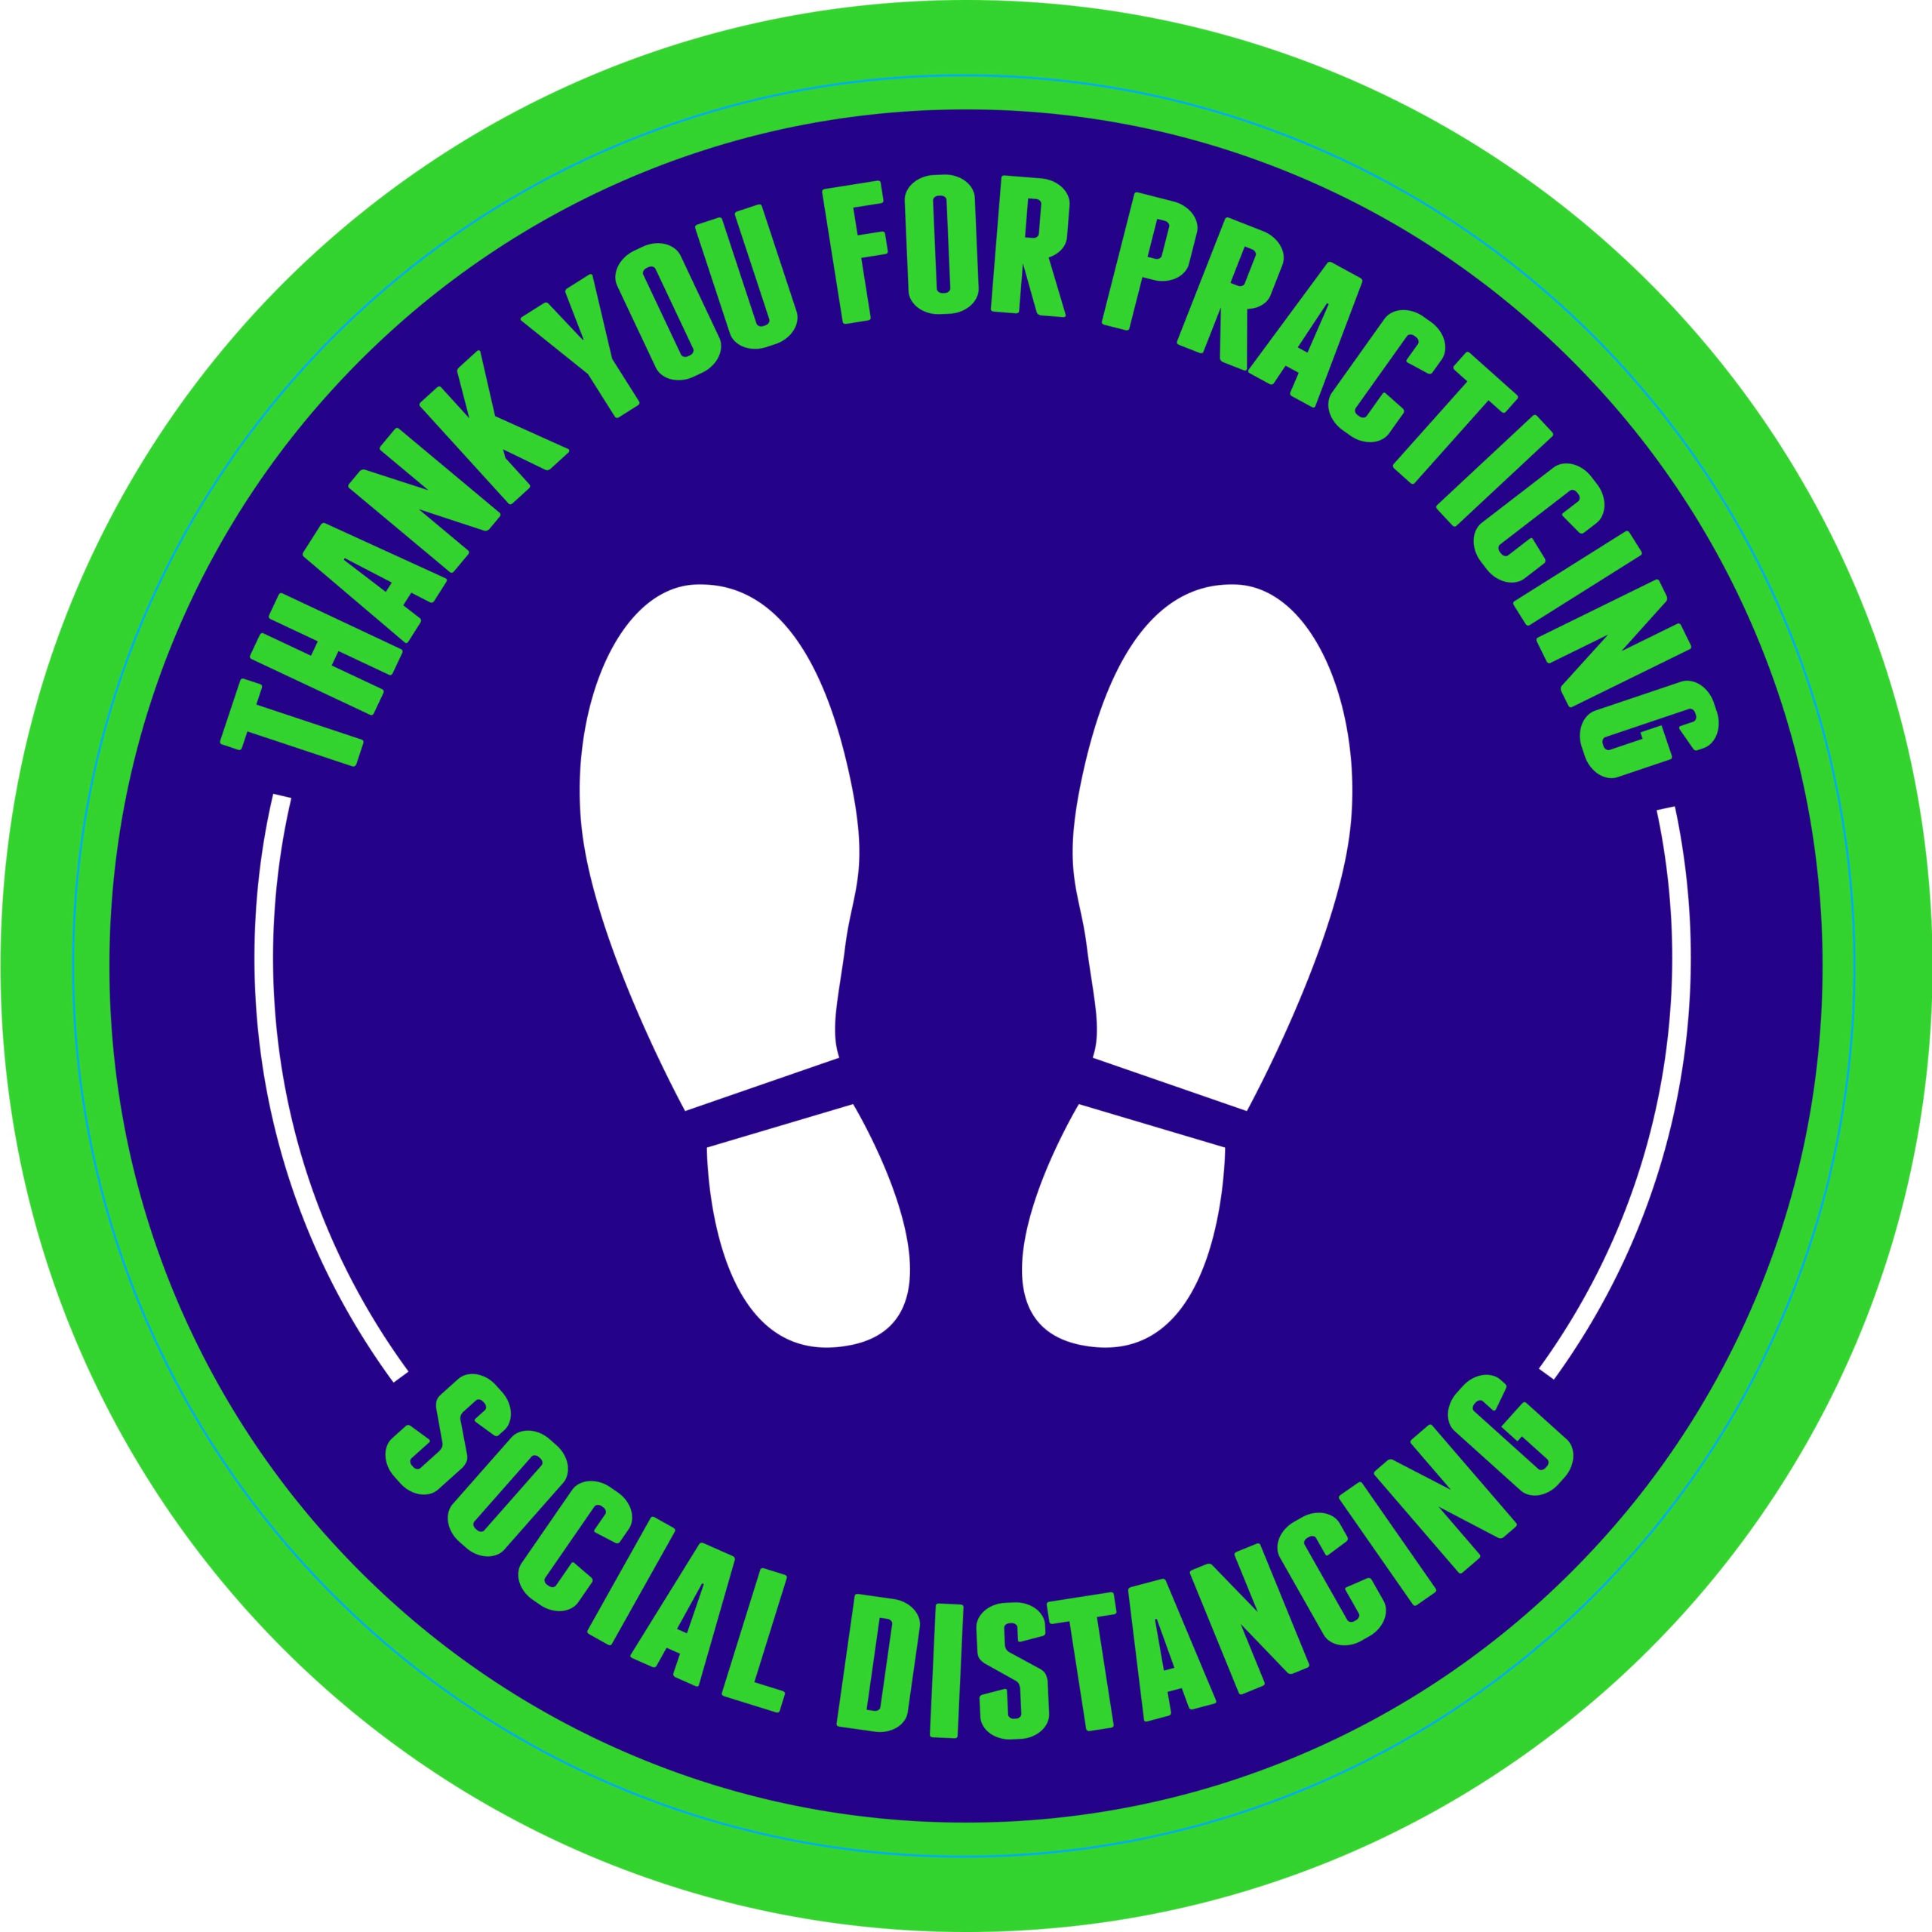 SOA - Social Distancing Floor 18" Diameter - PURPLE - 4 pack